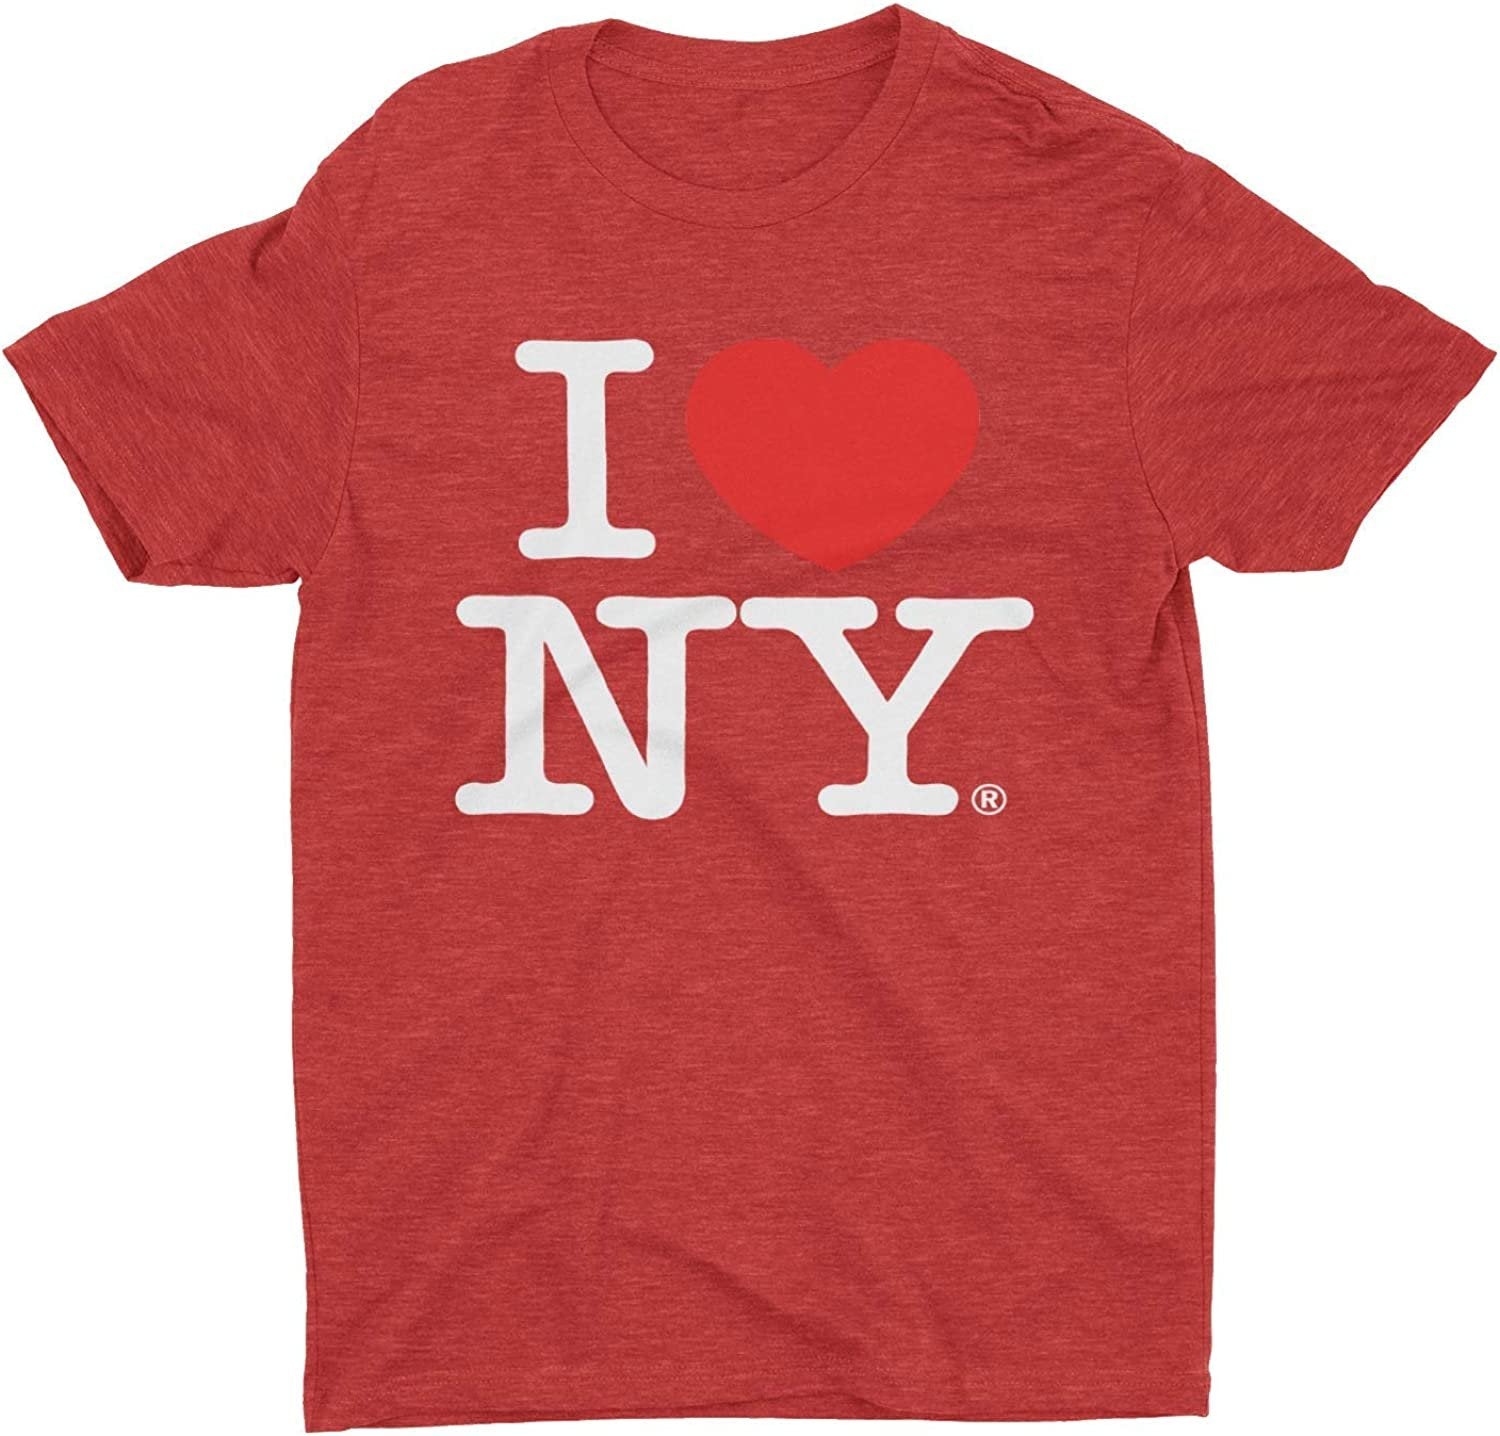 T-shirt rétro vintage I Love NY rouge chiné